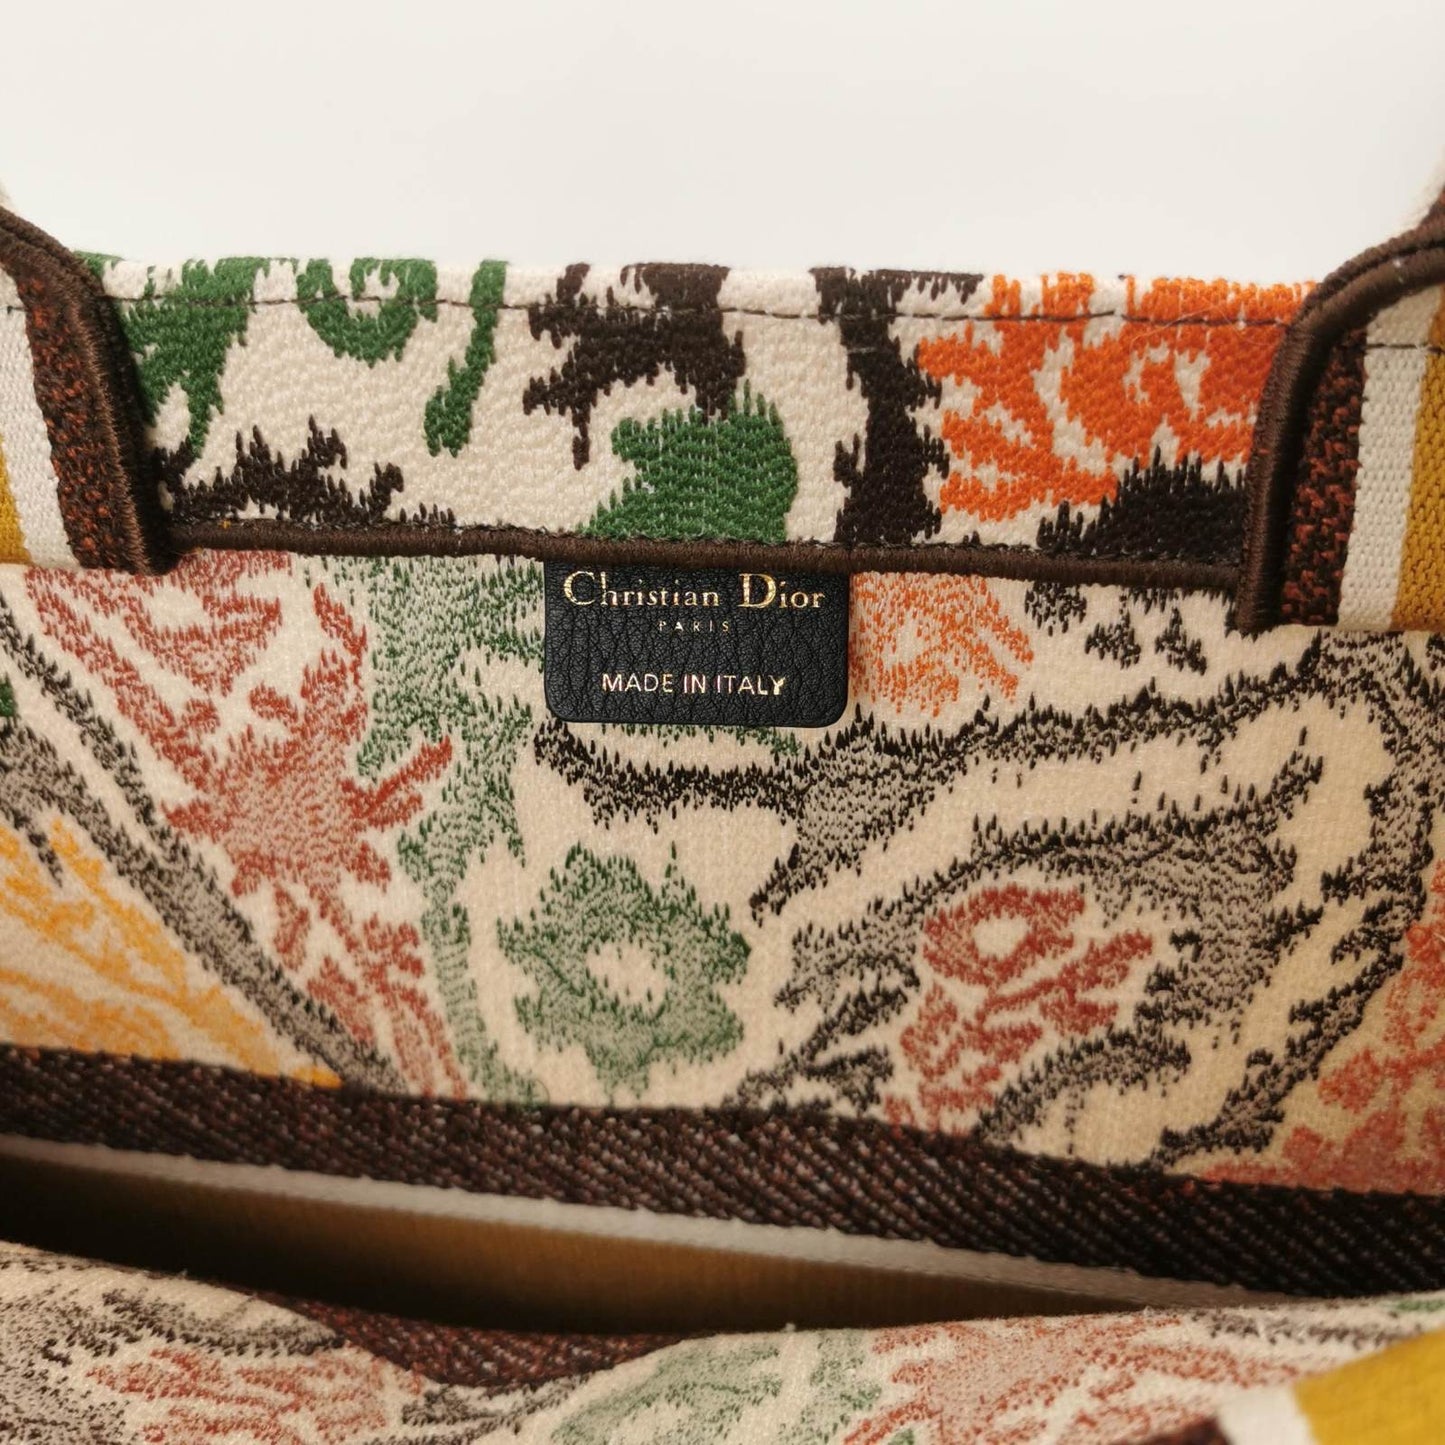 Christian Dior Book Tote Large Multicolour Floral Motif Embroidered Handbag